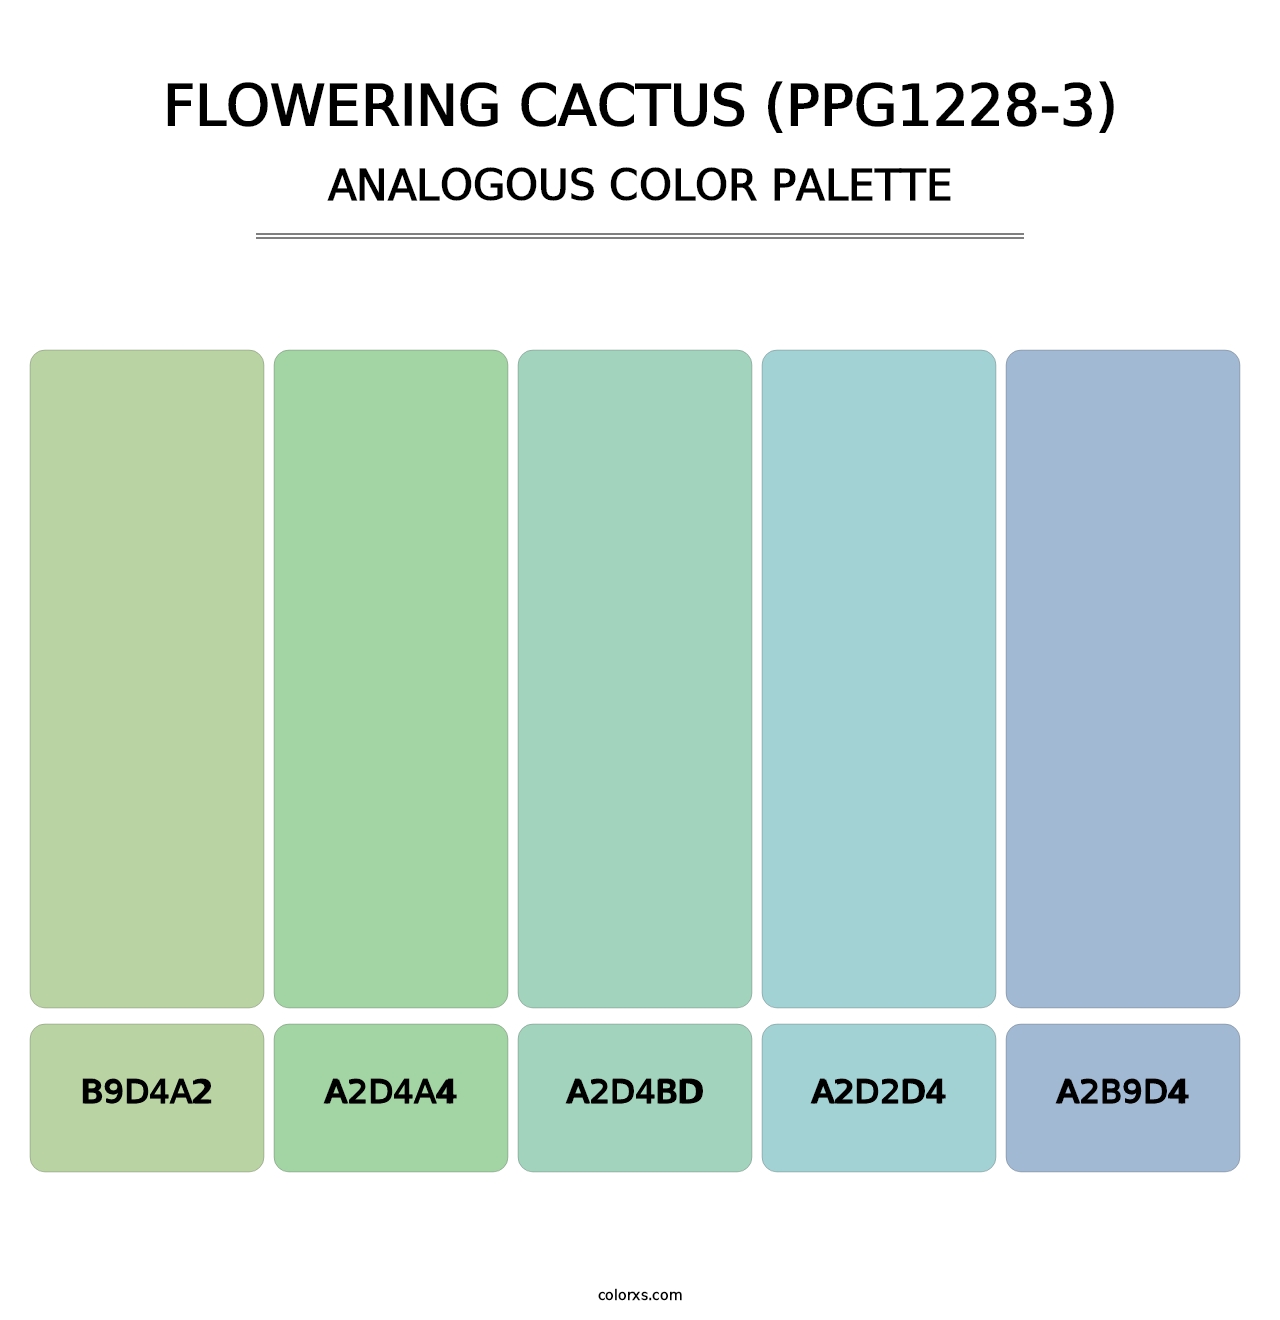 Flowering Cactus (PPG1228-3) - Analogous Color Palette